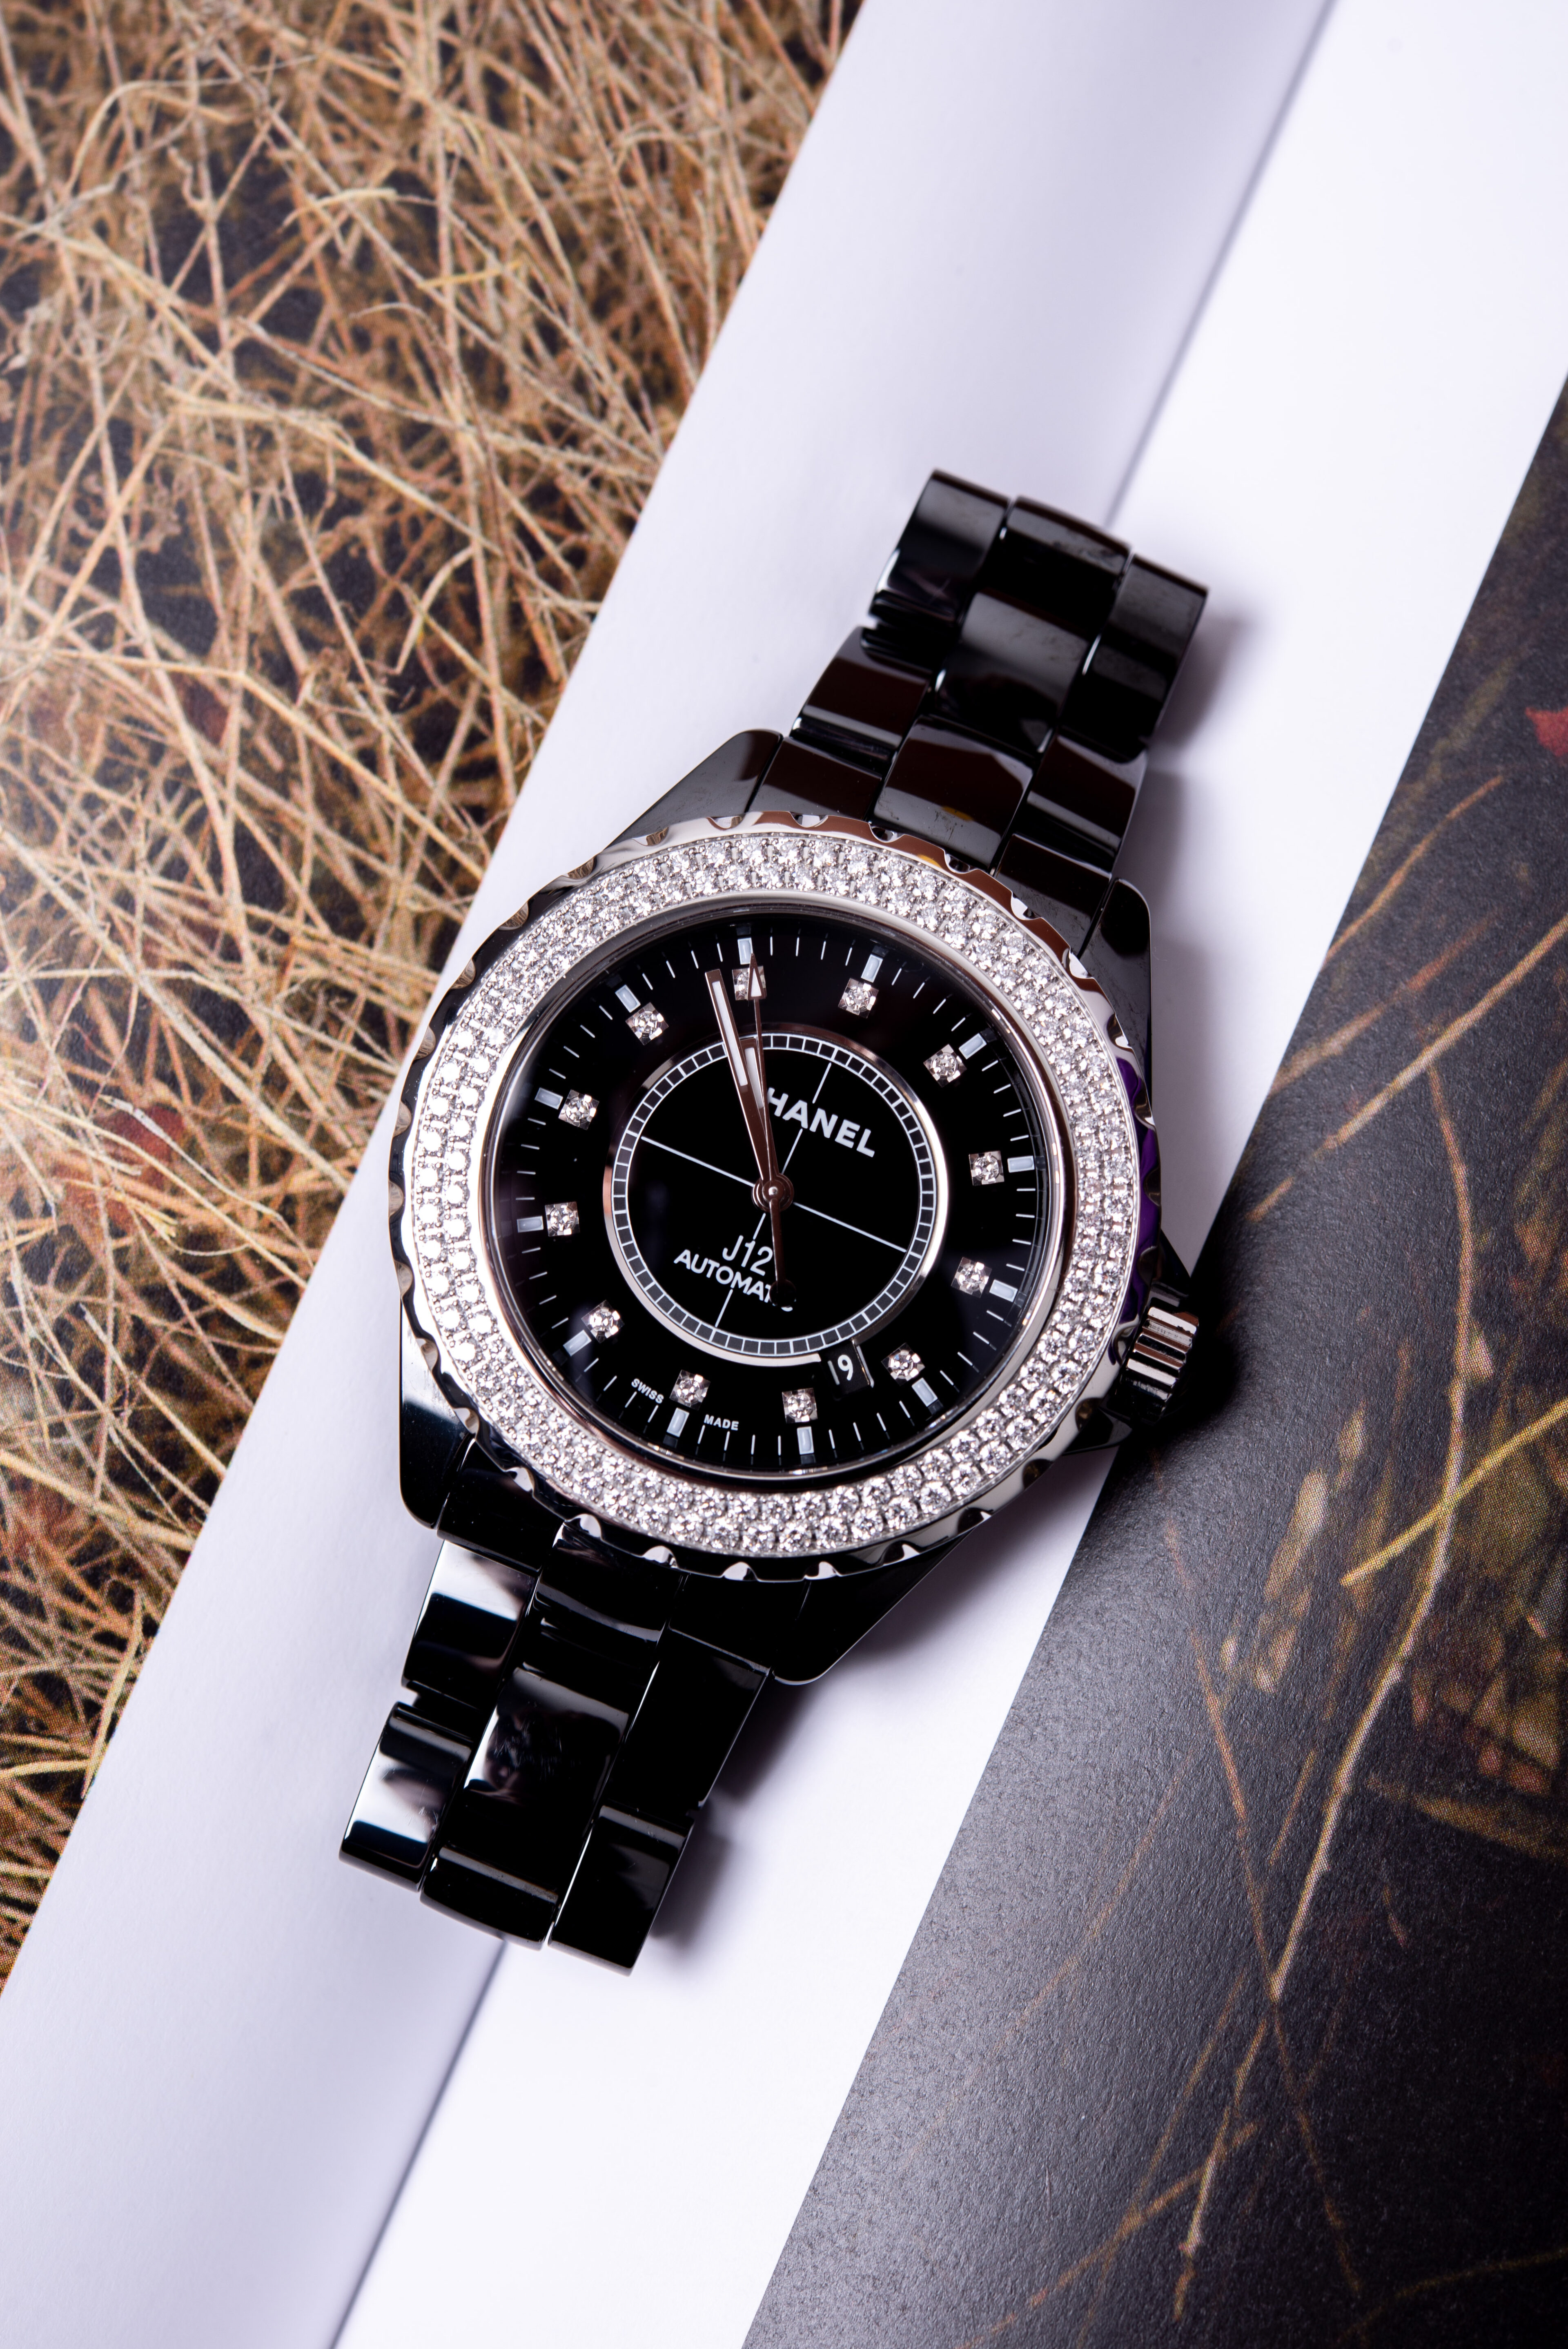 Женские часы Chanel Archive Les Intemporelles de Chanel Premiere H2147  обзор отзывы описание продажа на Luxwatchua